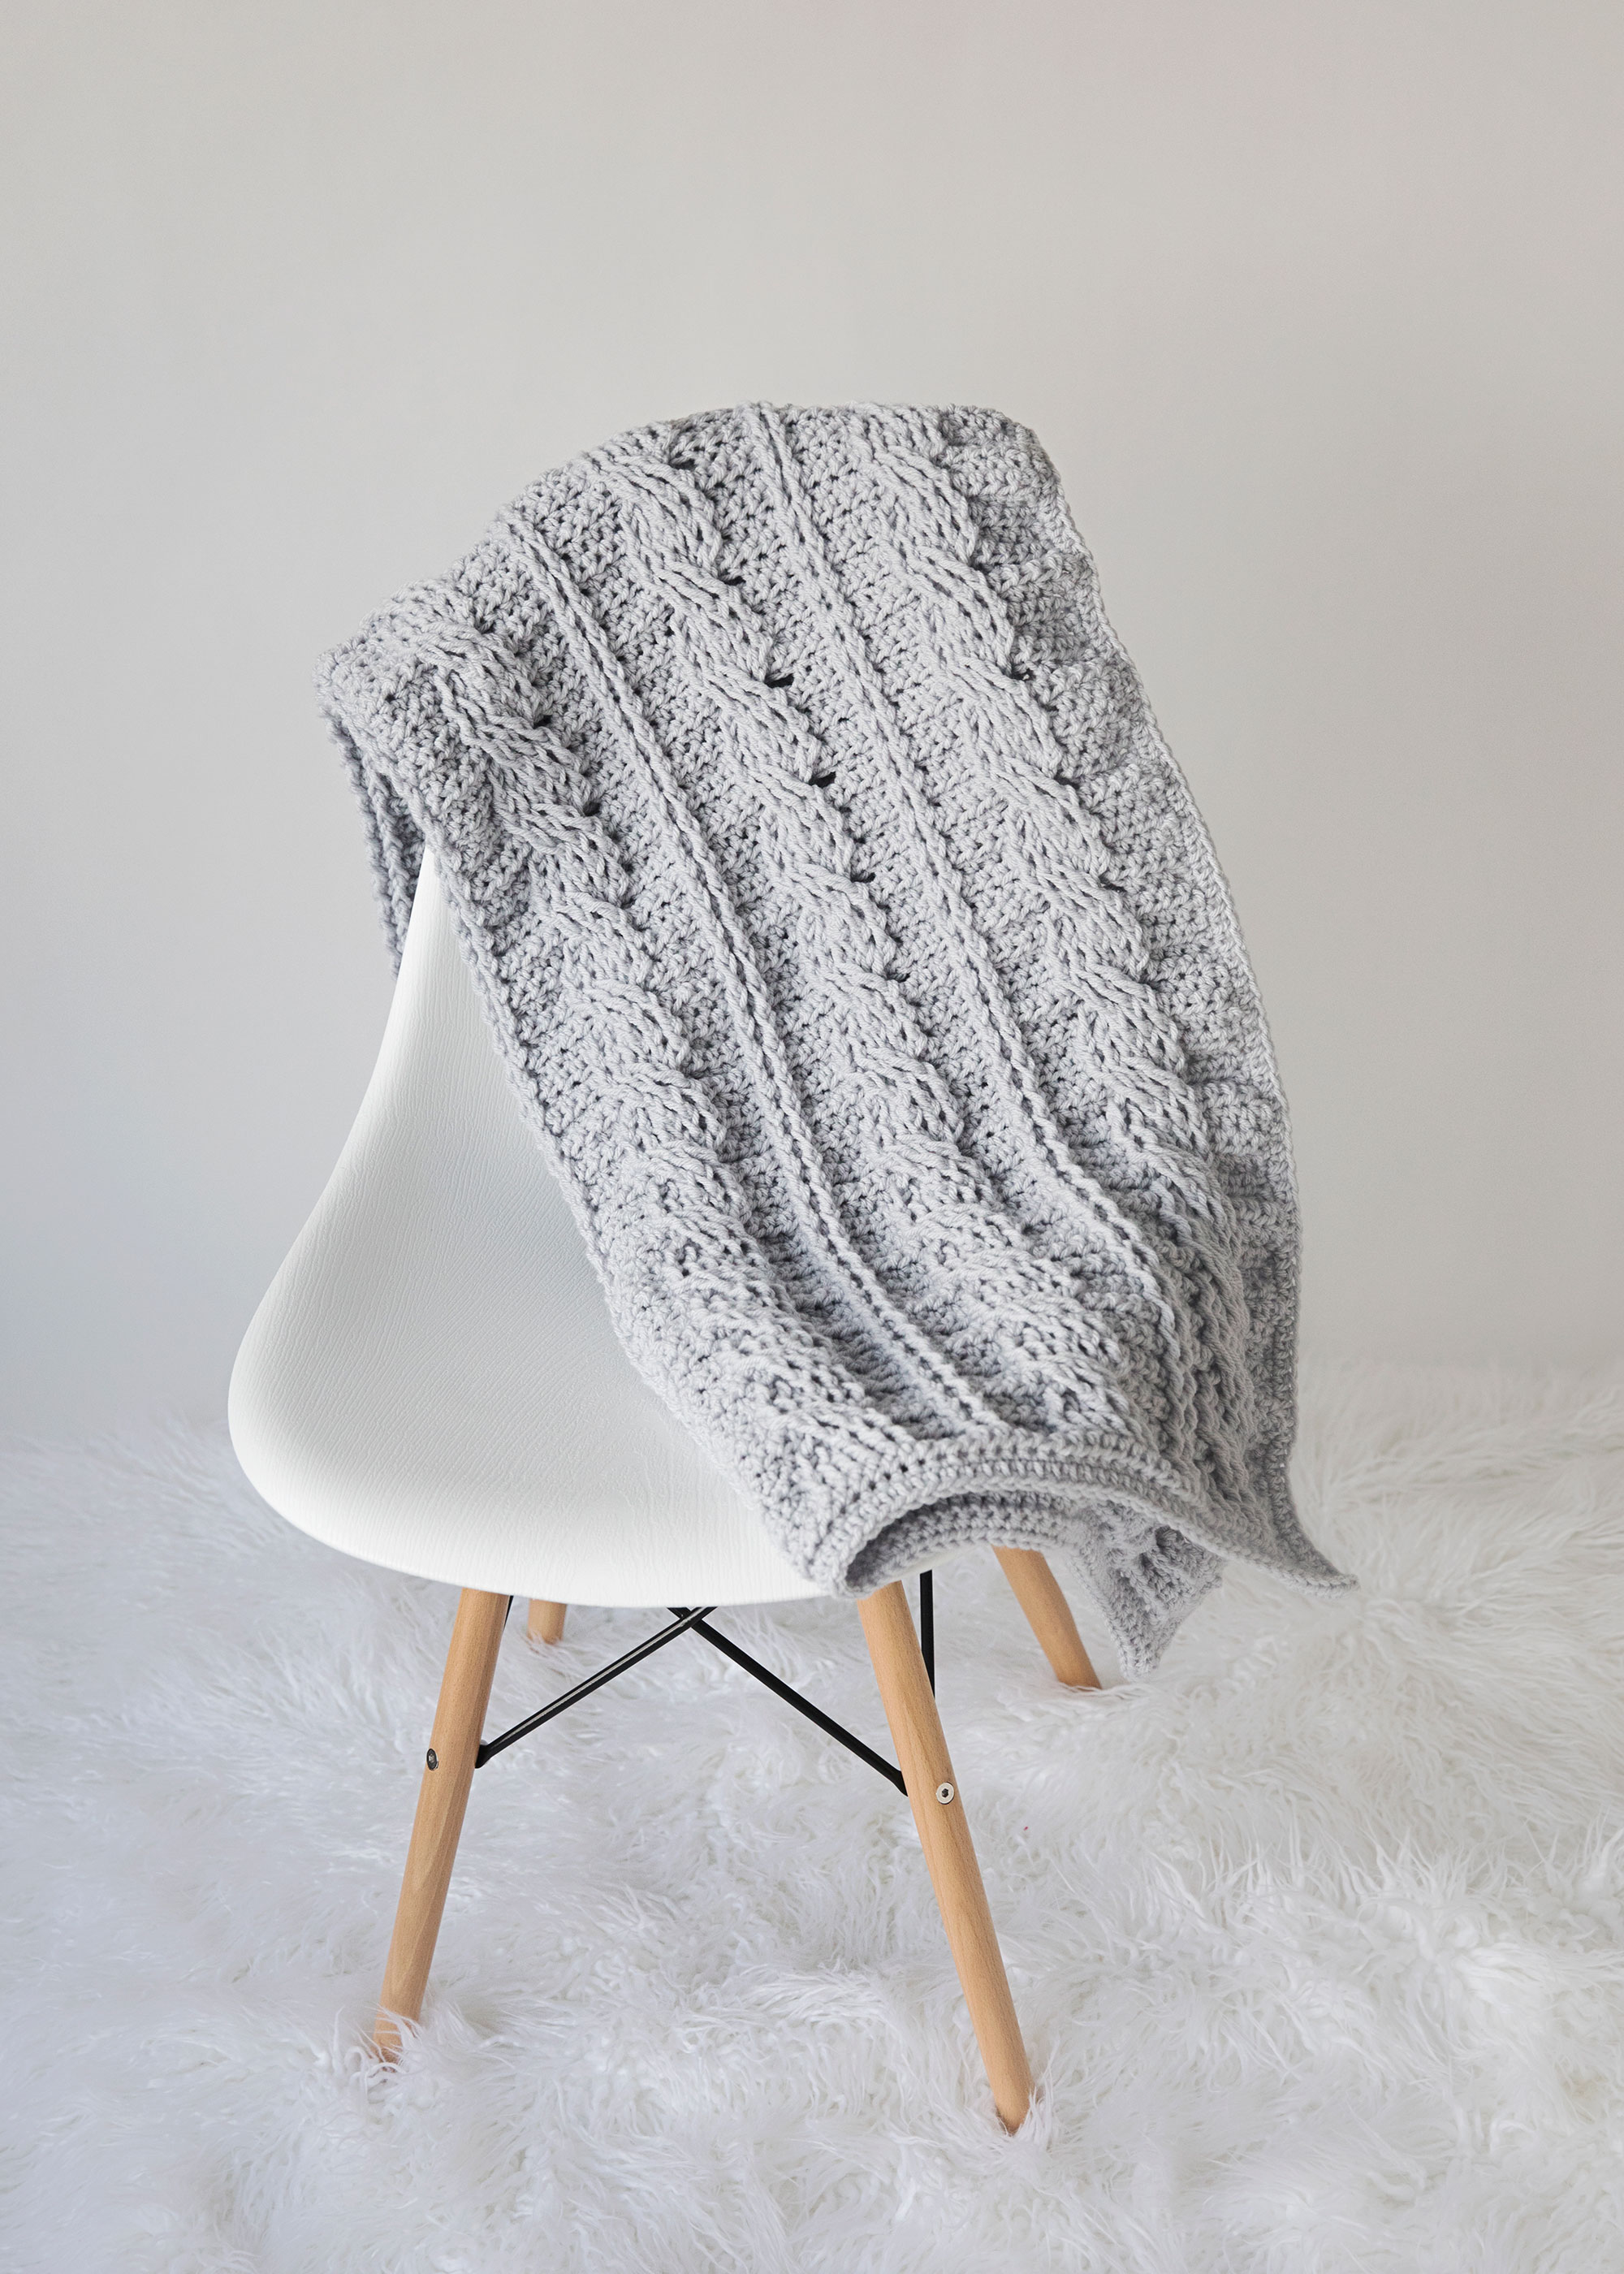 Cable Crochet Blanket